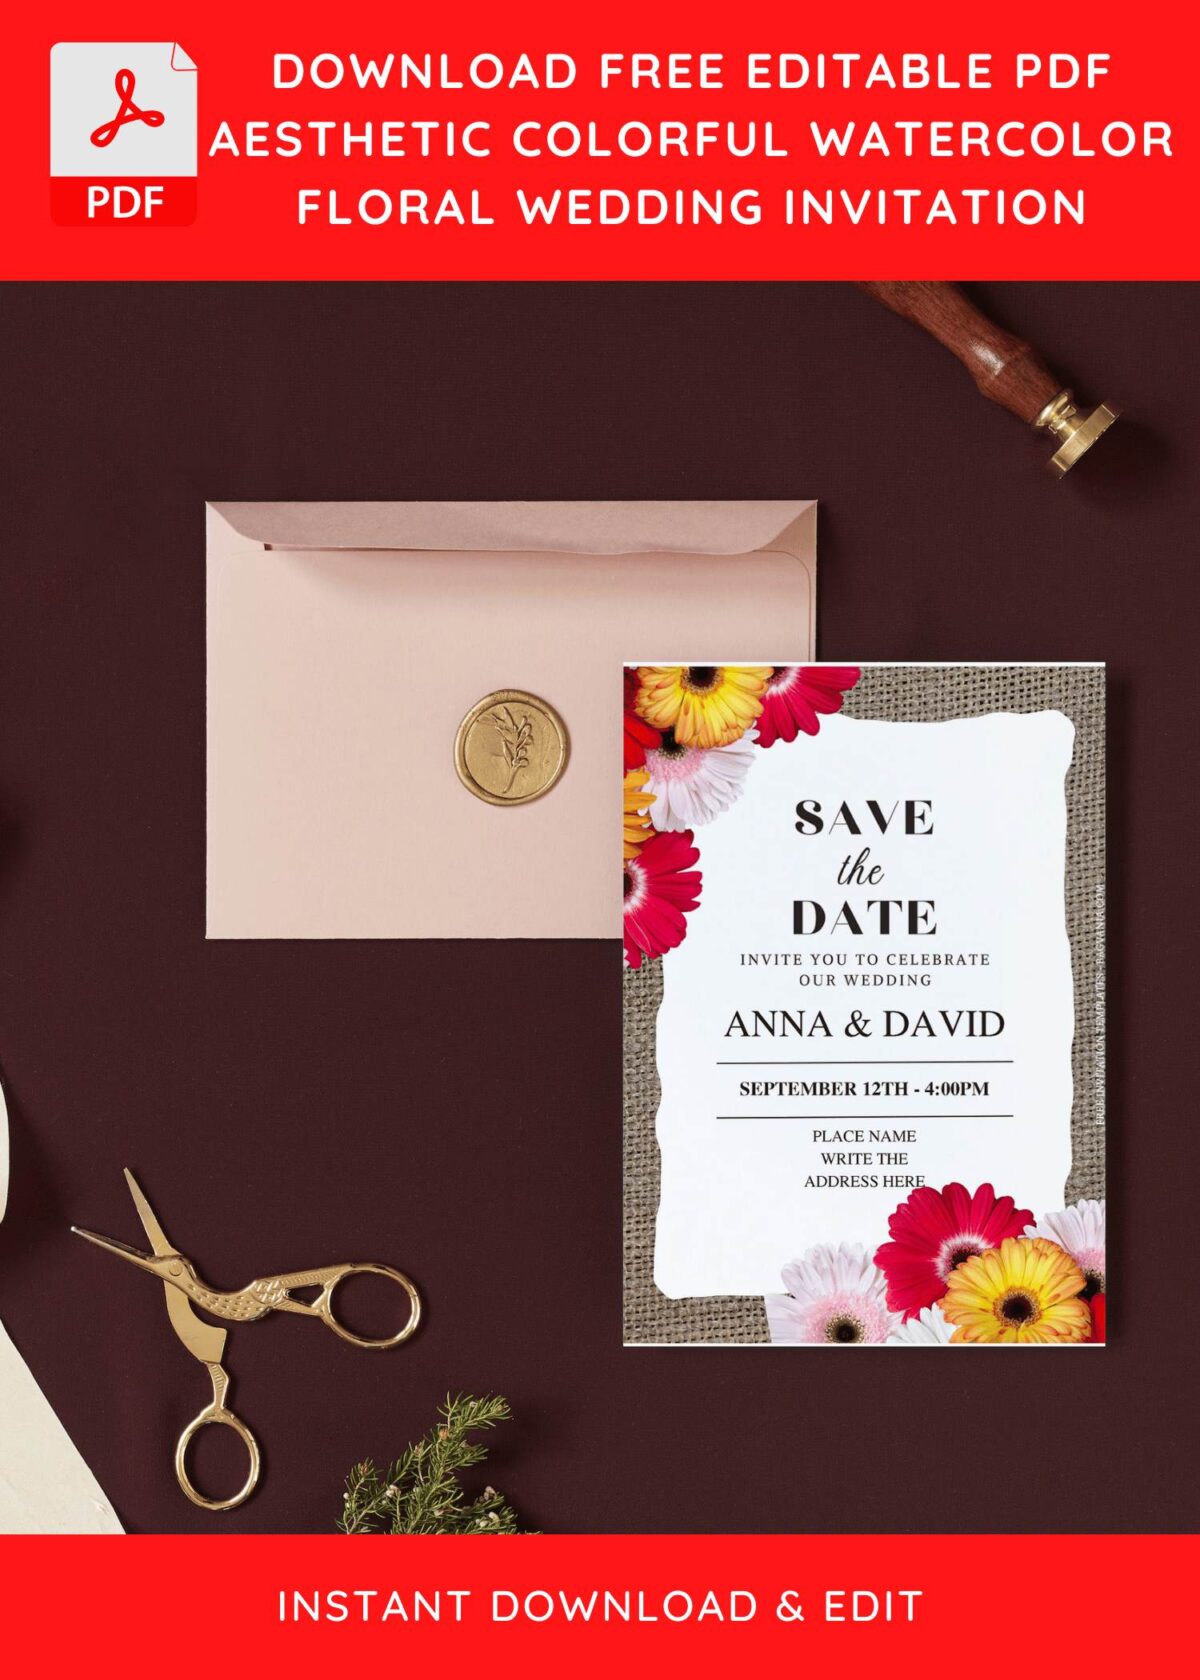 (Free Editable PDF) Soft & Delicate Sunflower Wedding Invitation Templates I